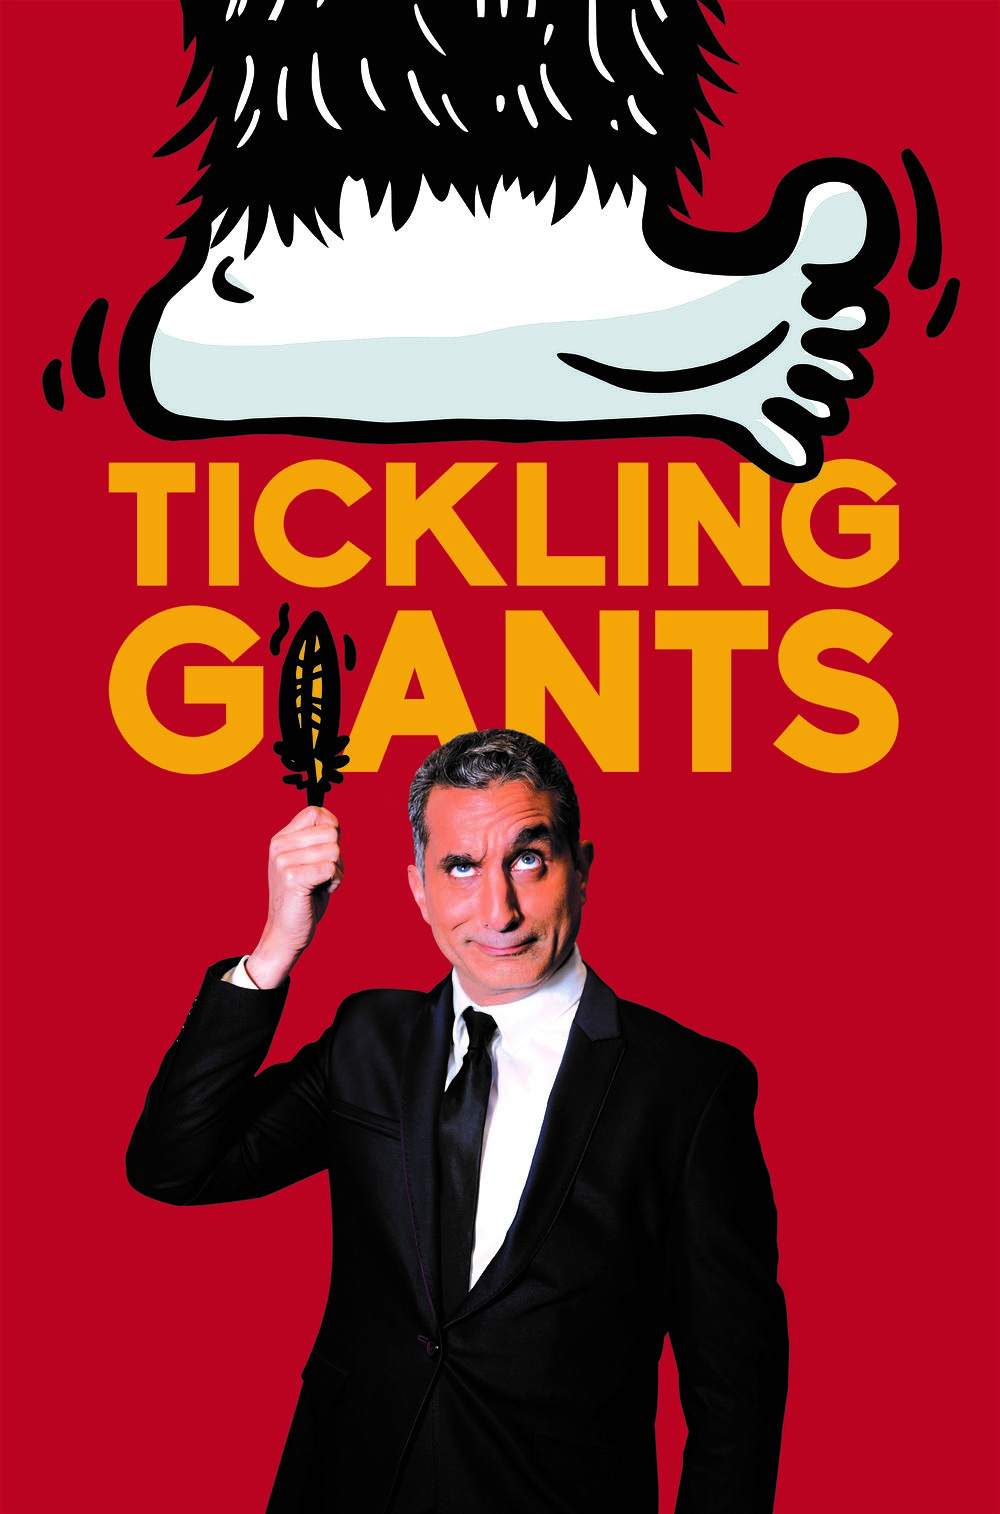 tickling giants